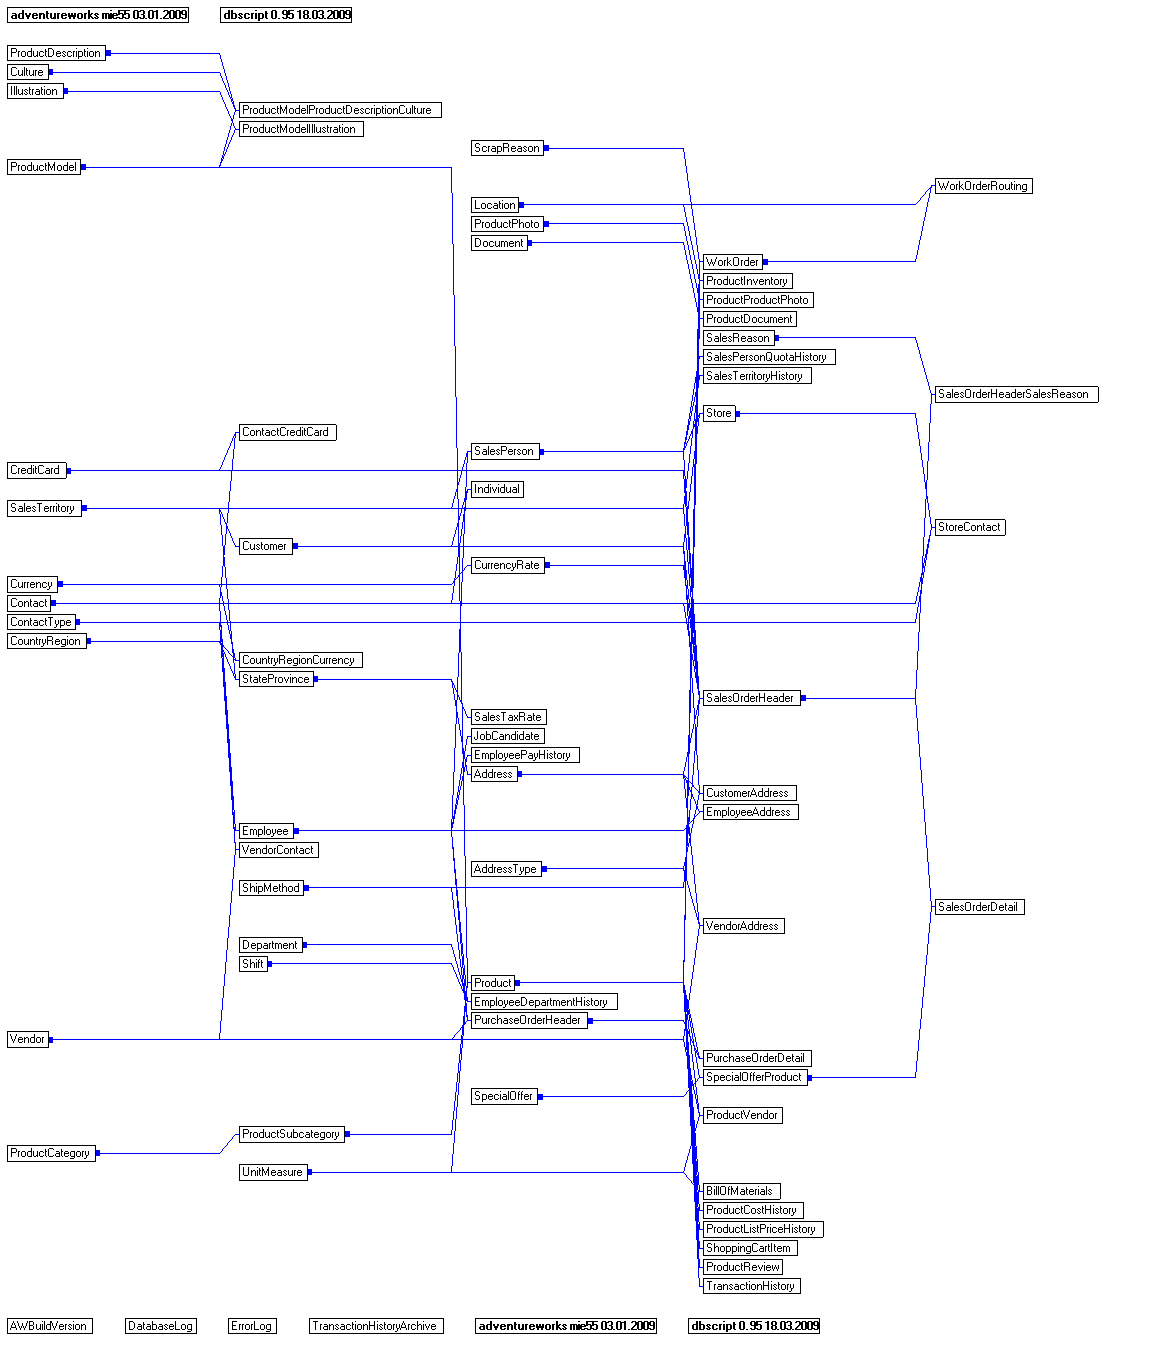 AdventureWorks data diagram generated by dbscript